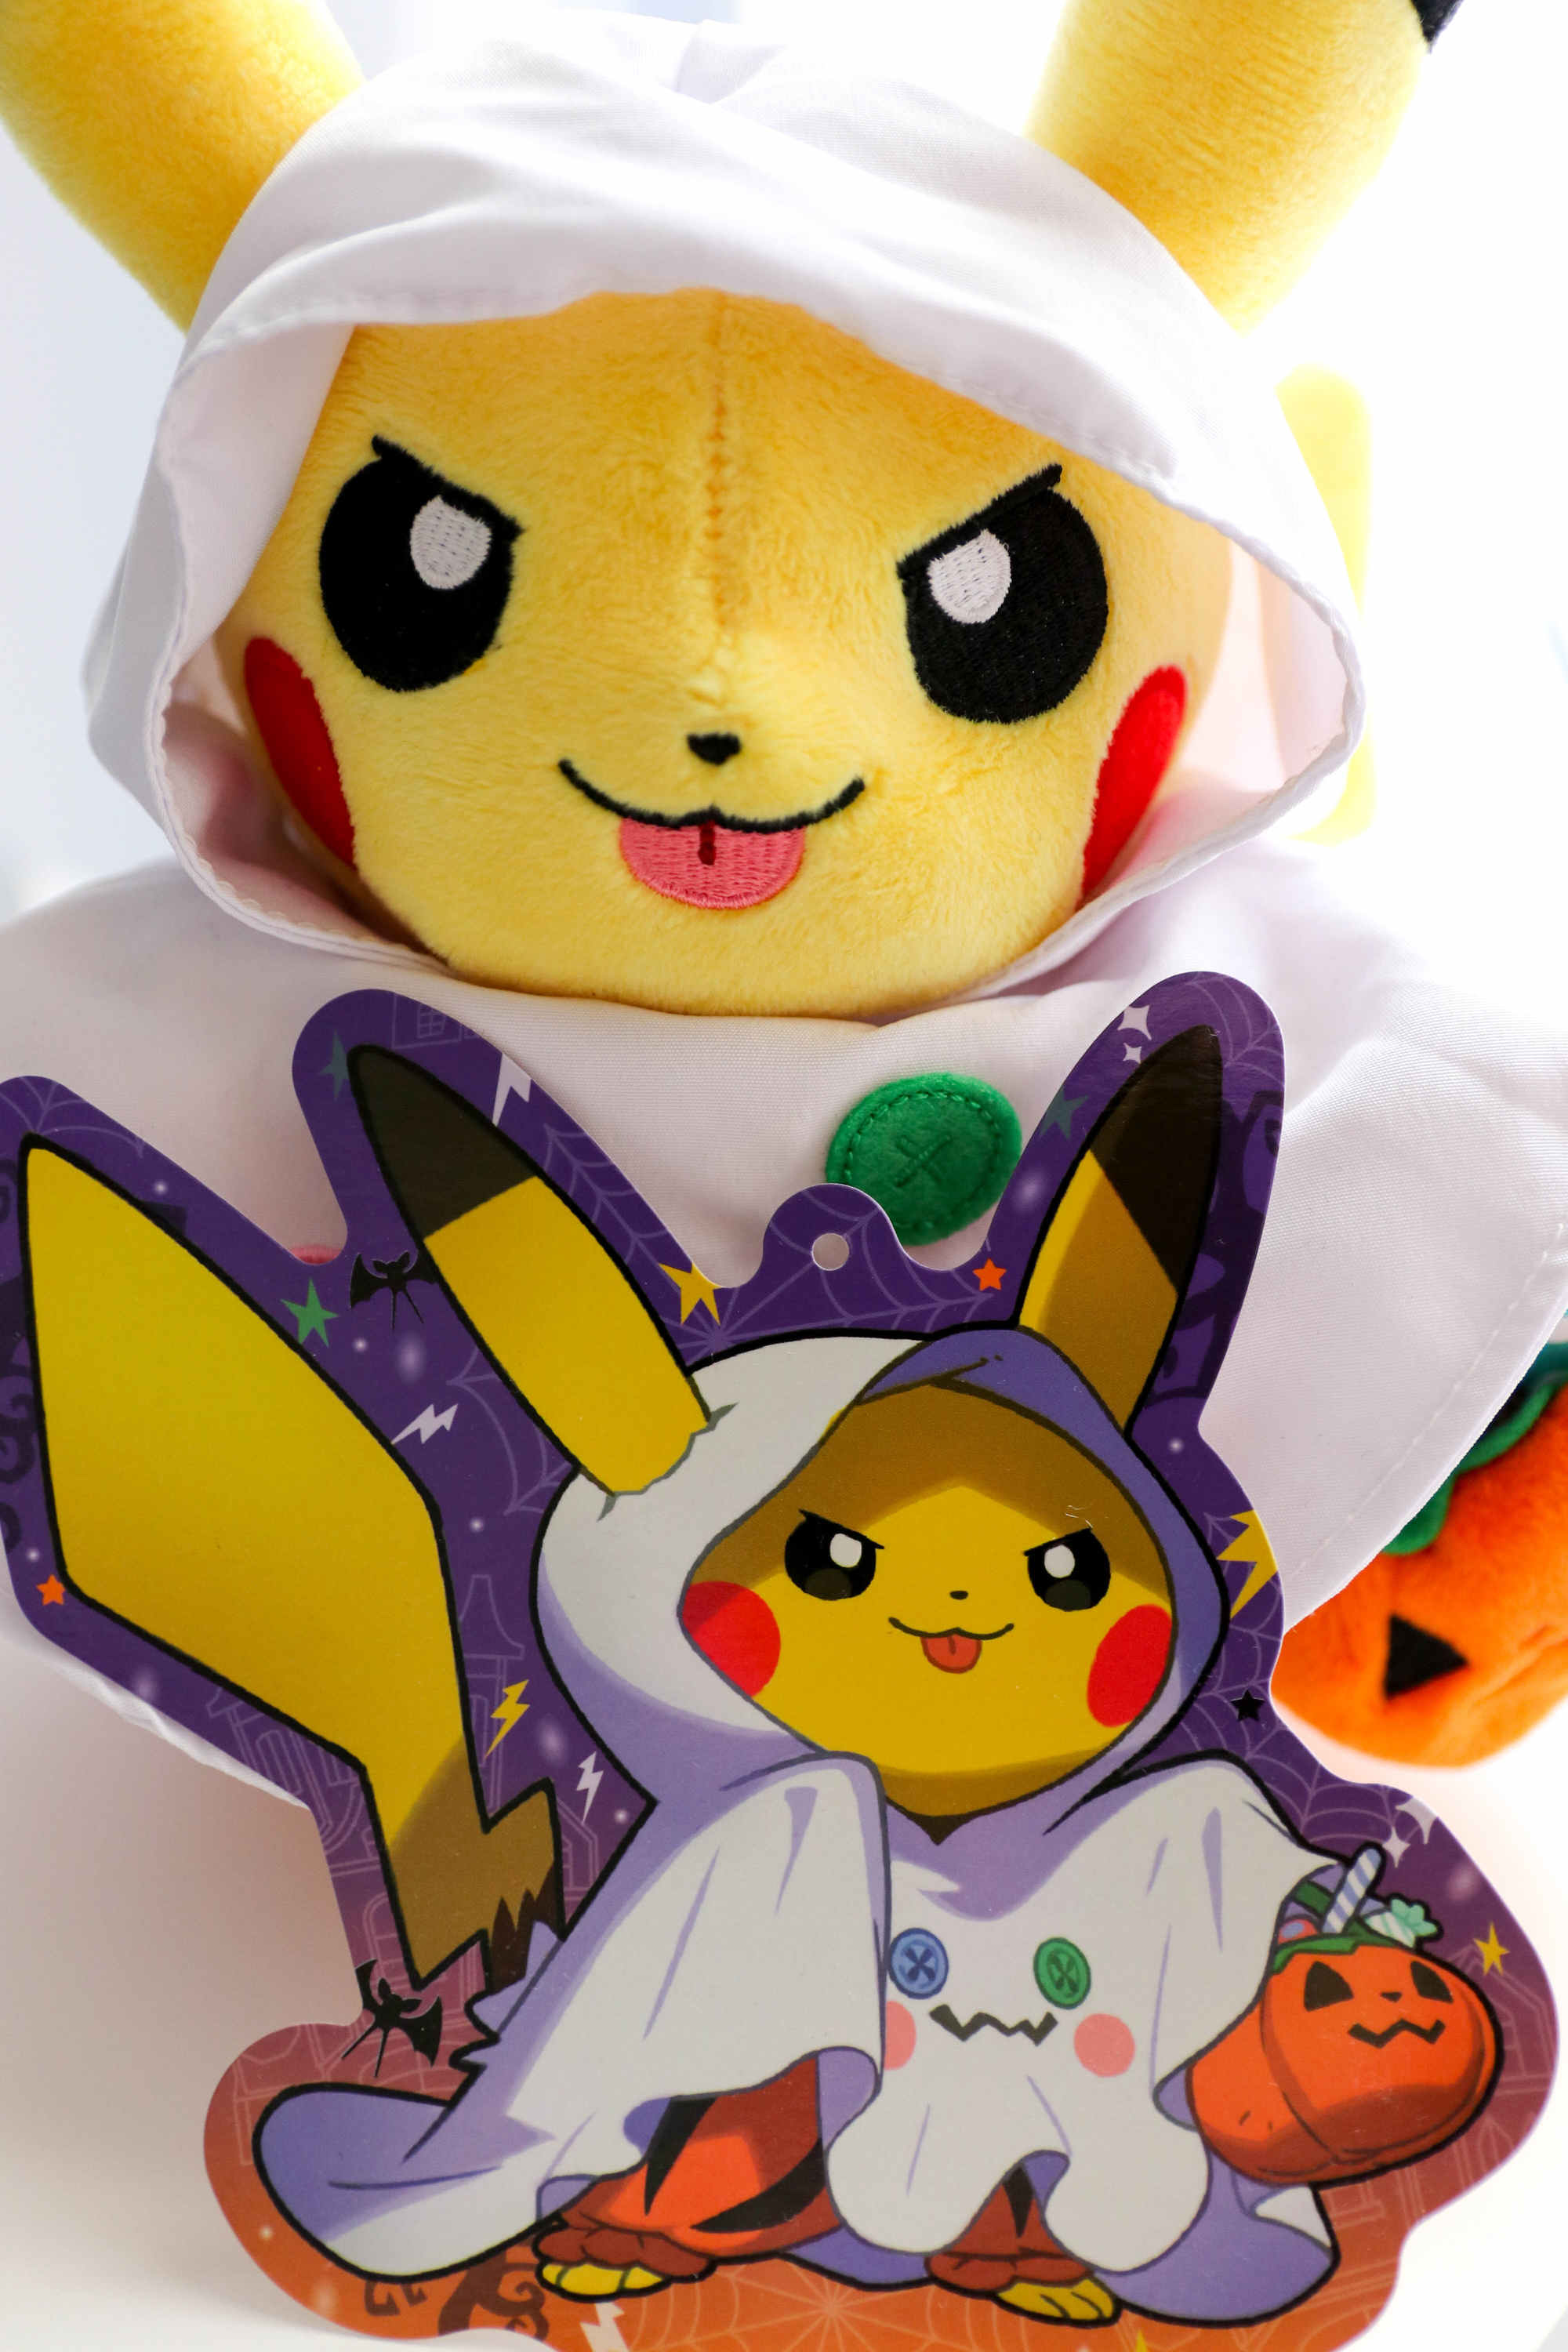 Pokemon Fan Shows Off Impressive Halloween-Themed Eeveelutions